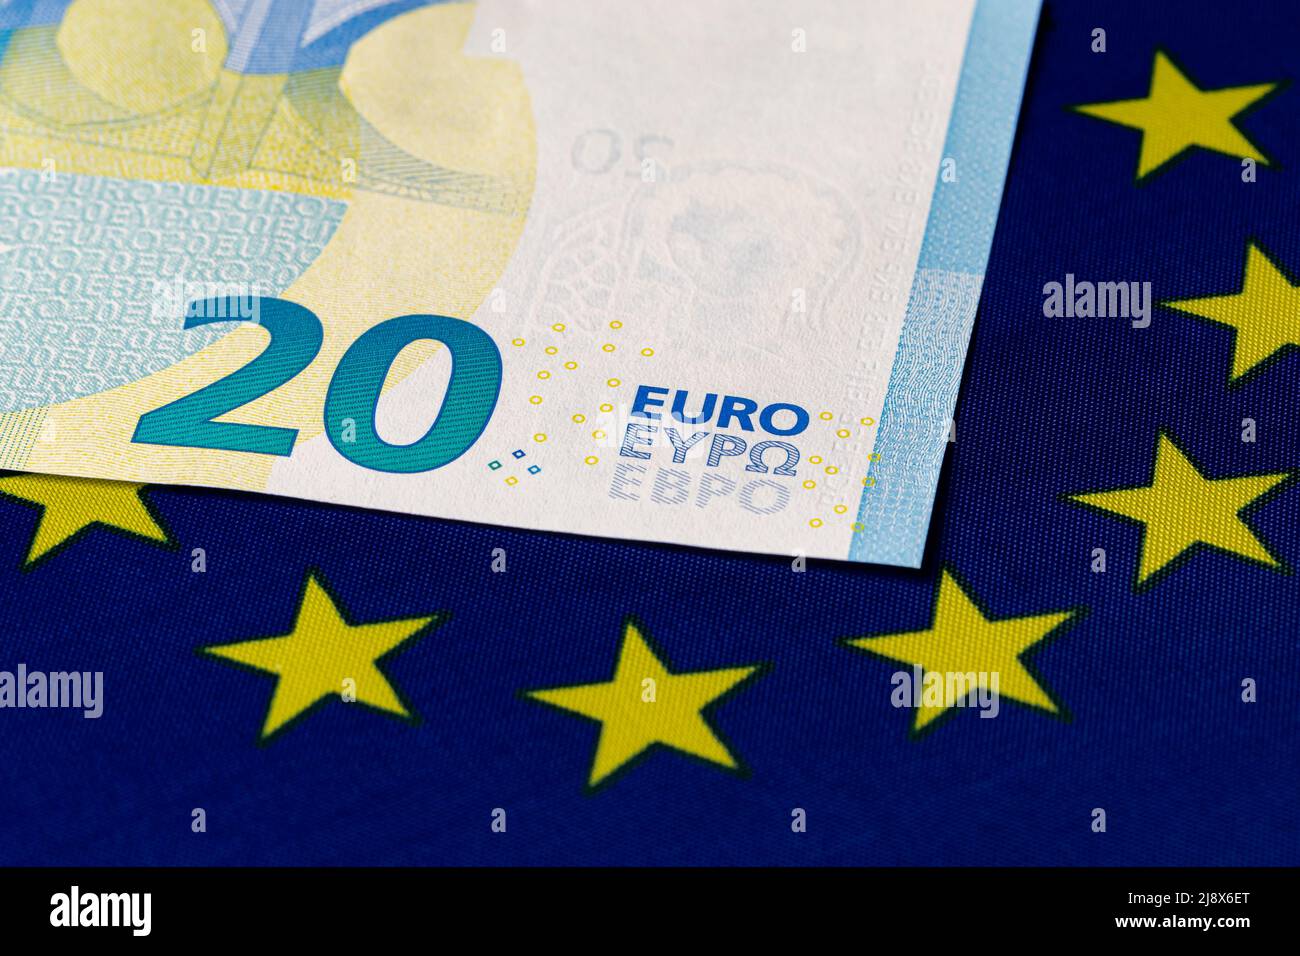 Euro banknote on European Union flag. Economy, financial and banking concept. Stock Photo